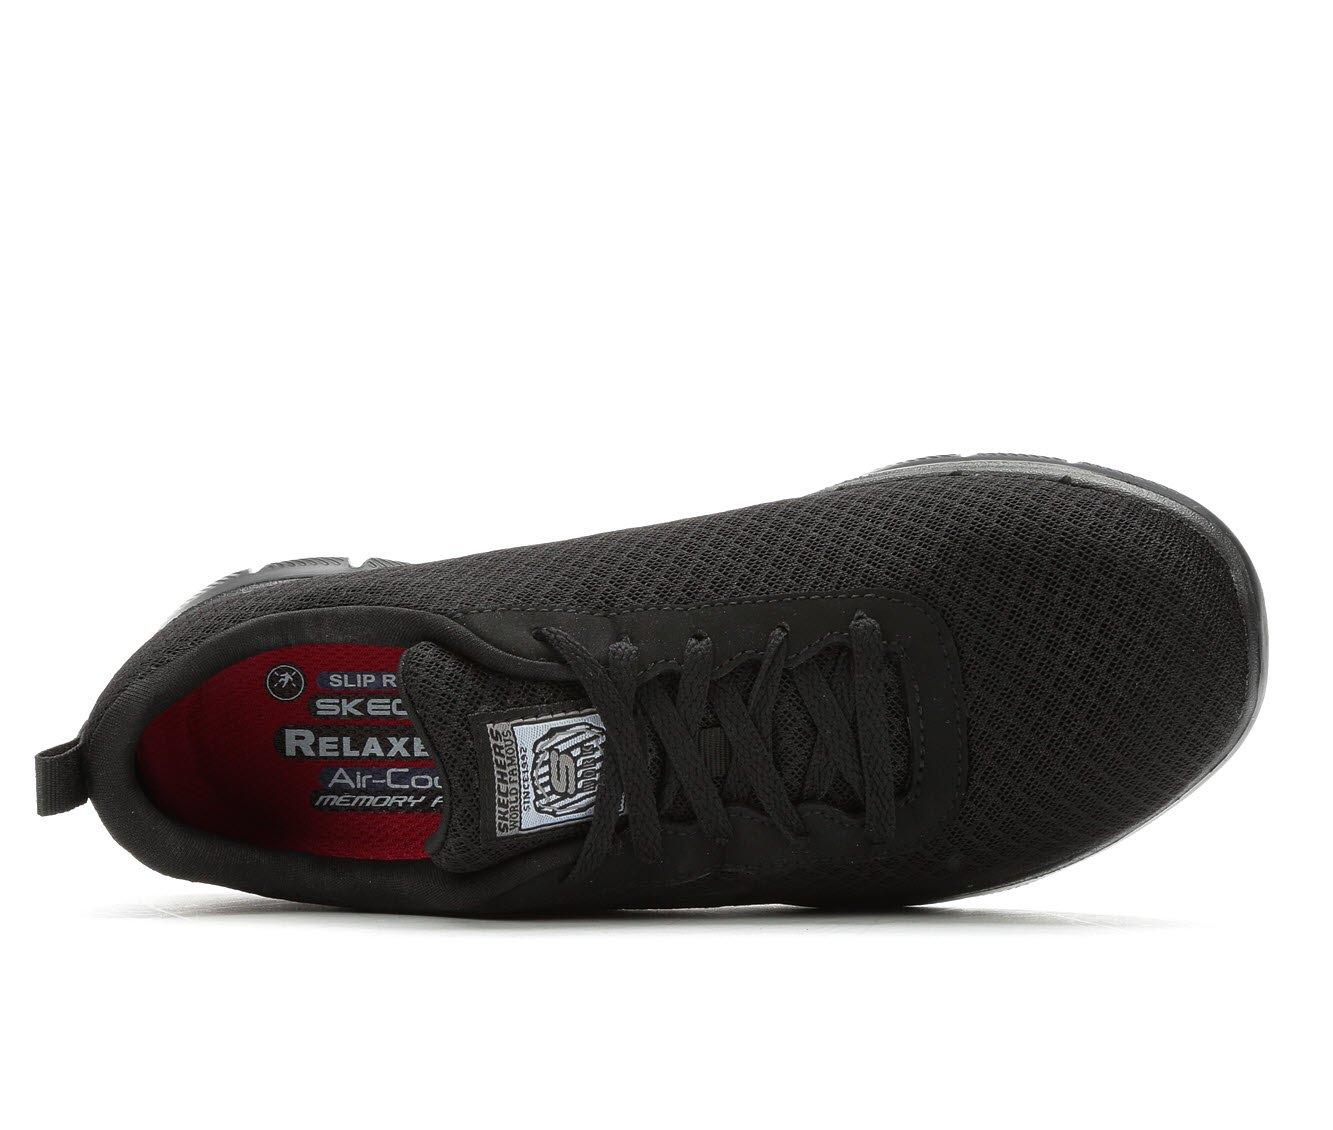 Skechers relaxed fit memory foam shoes, Guardar 86% disponible gran  descuento 